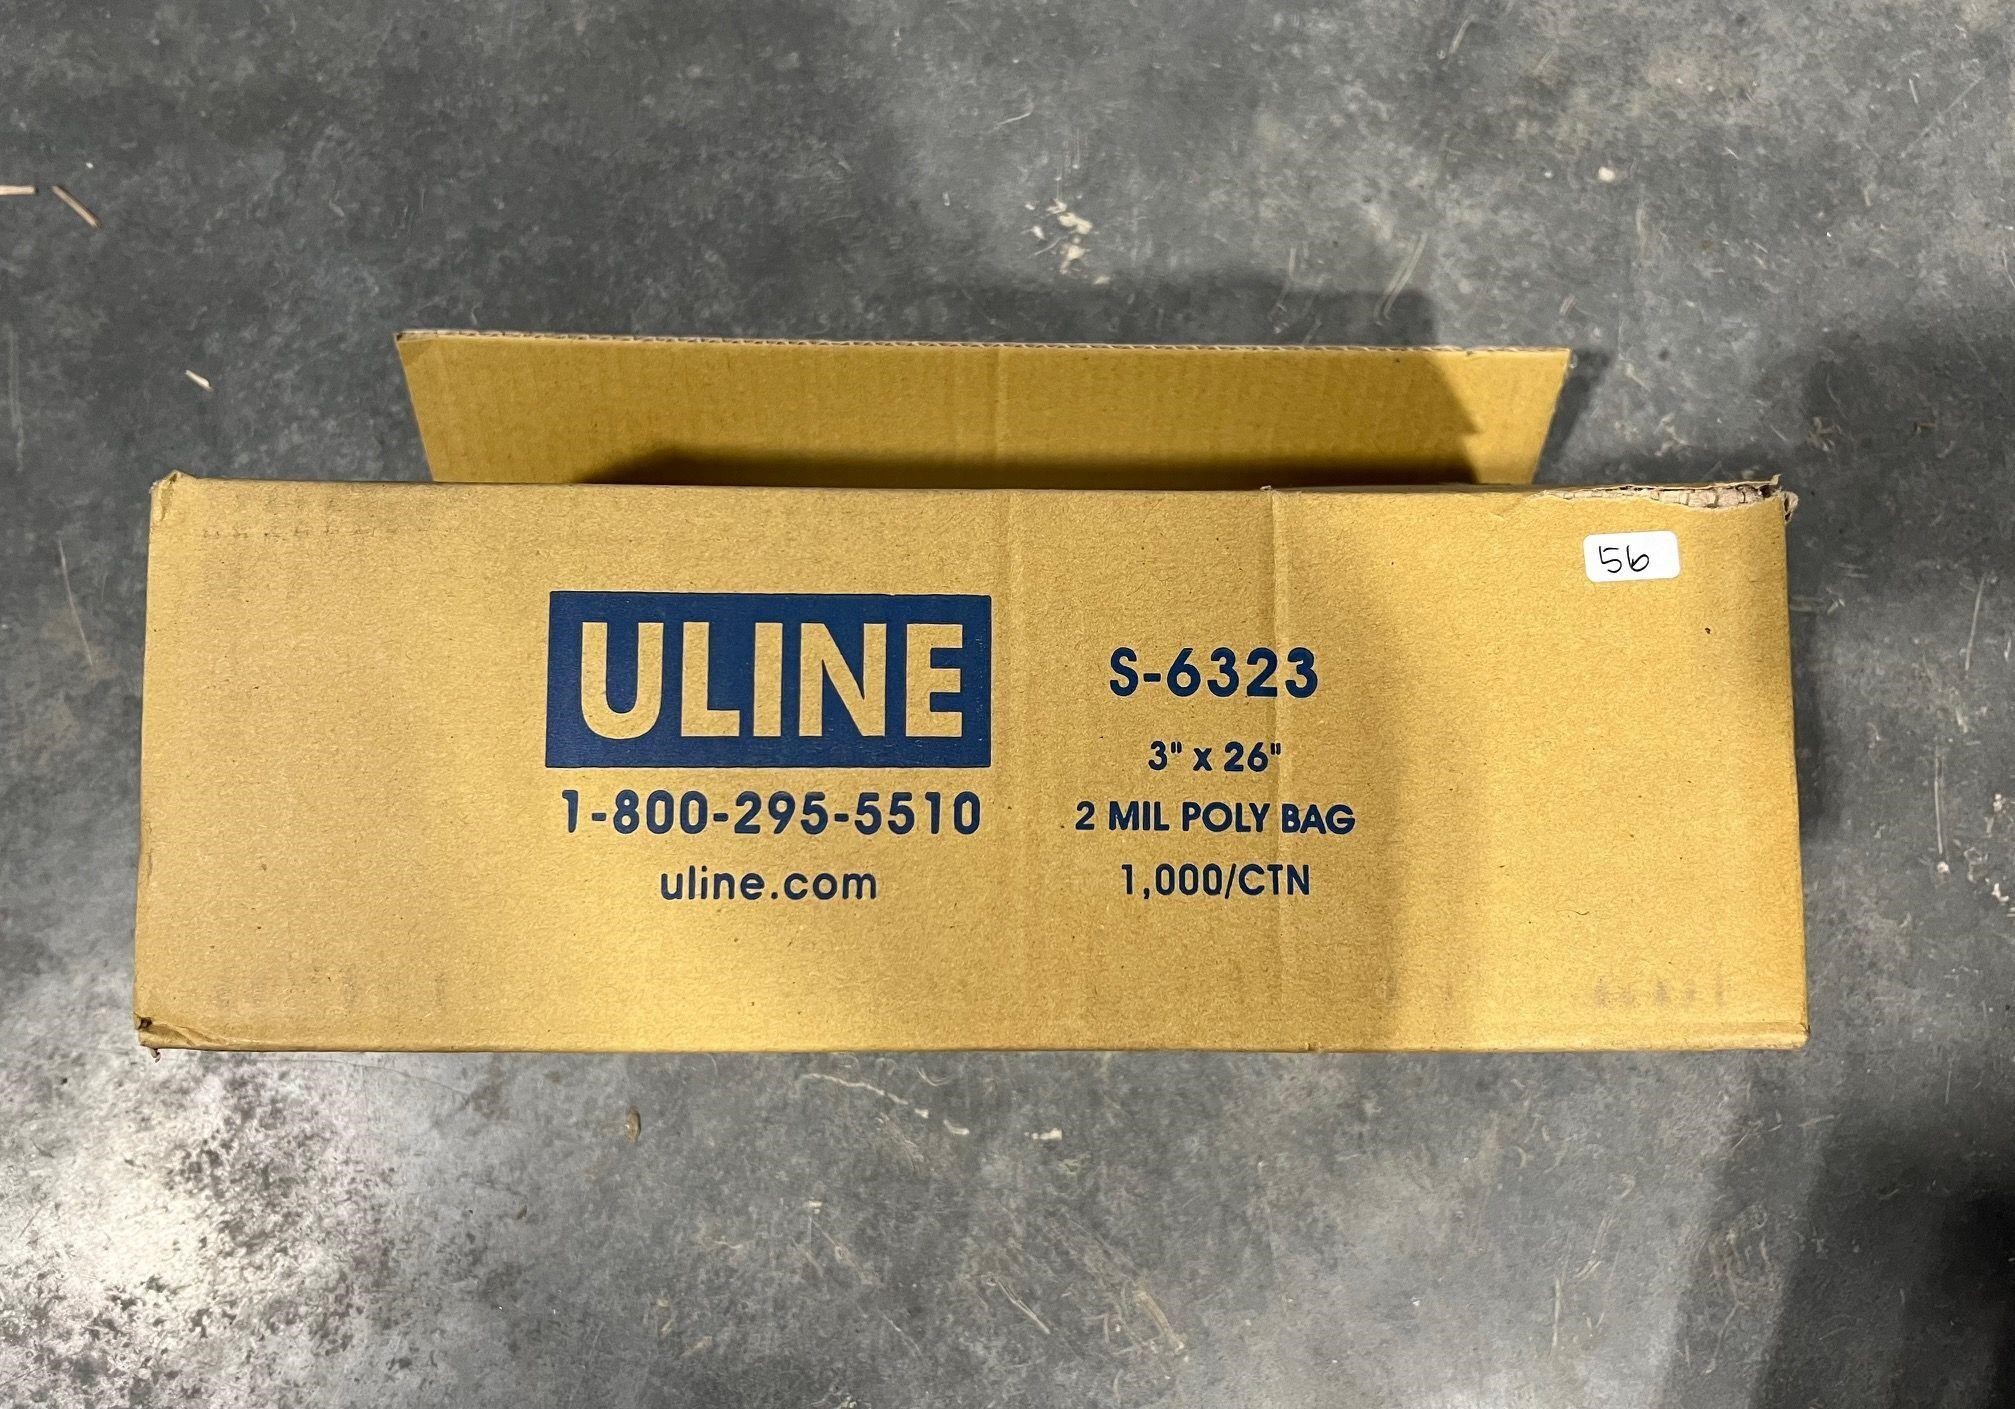 ULINE 2 MIL POLY BAG 3x26 - OPENED BOX